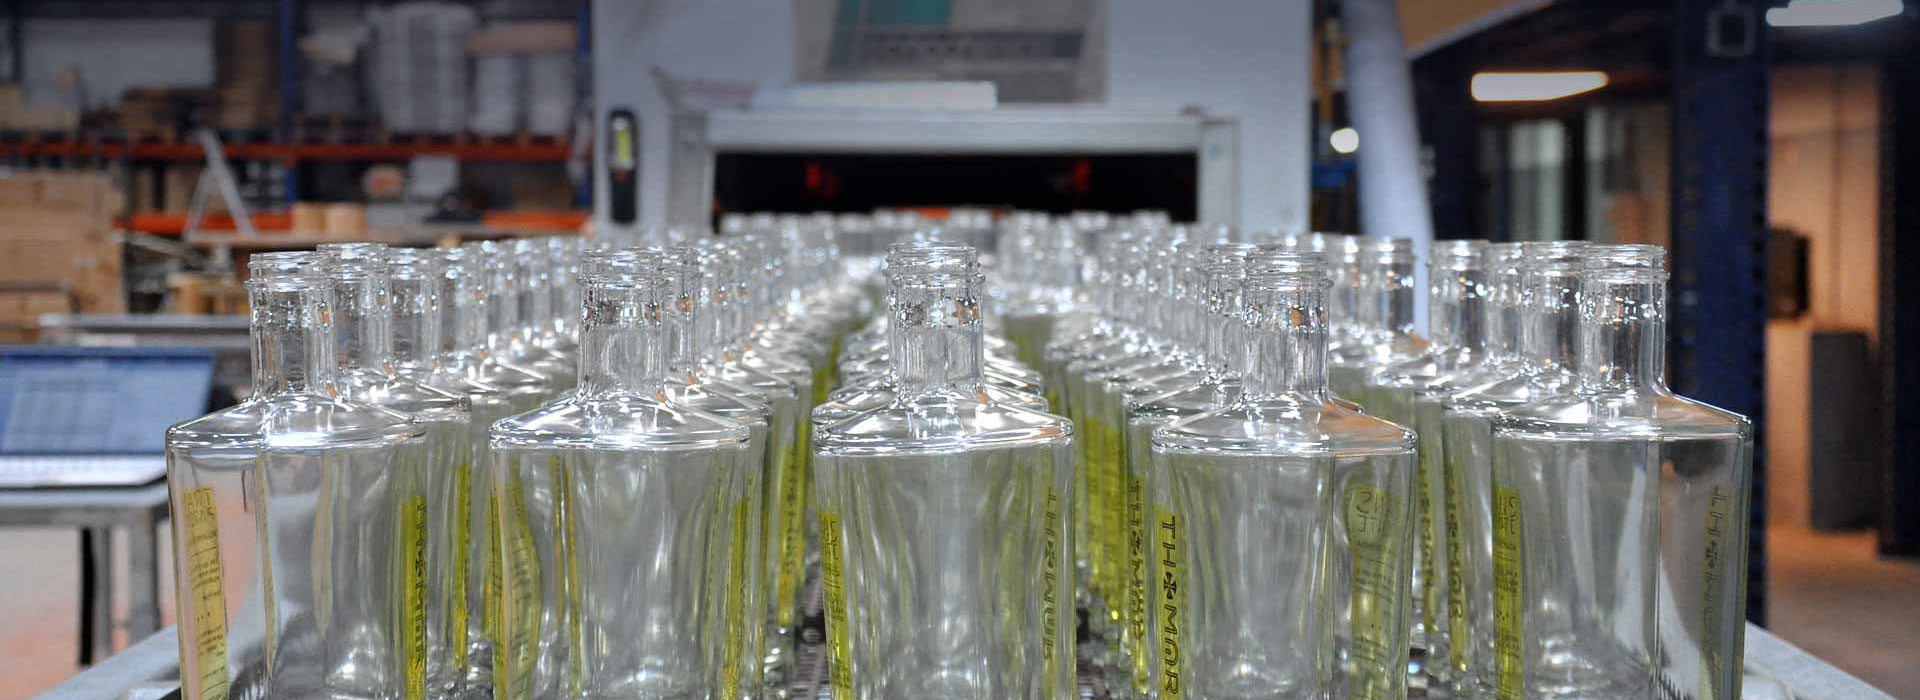 fábrica garrafas de vidro personalizadas - banner